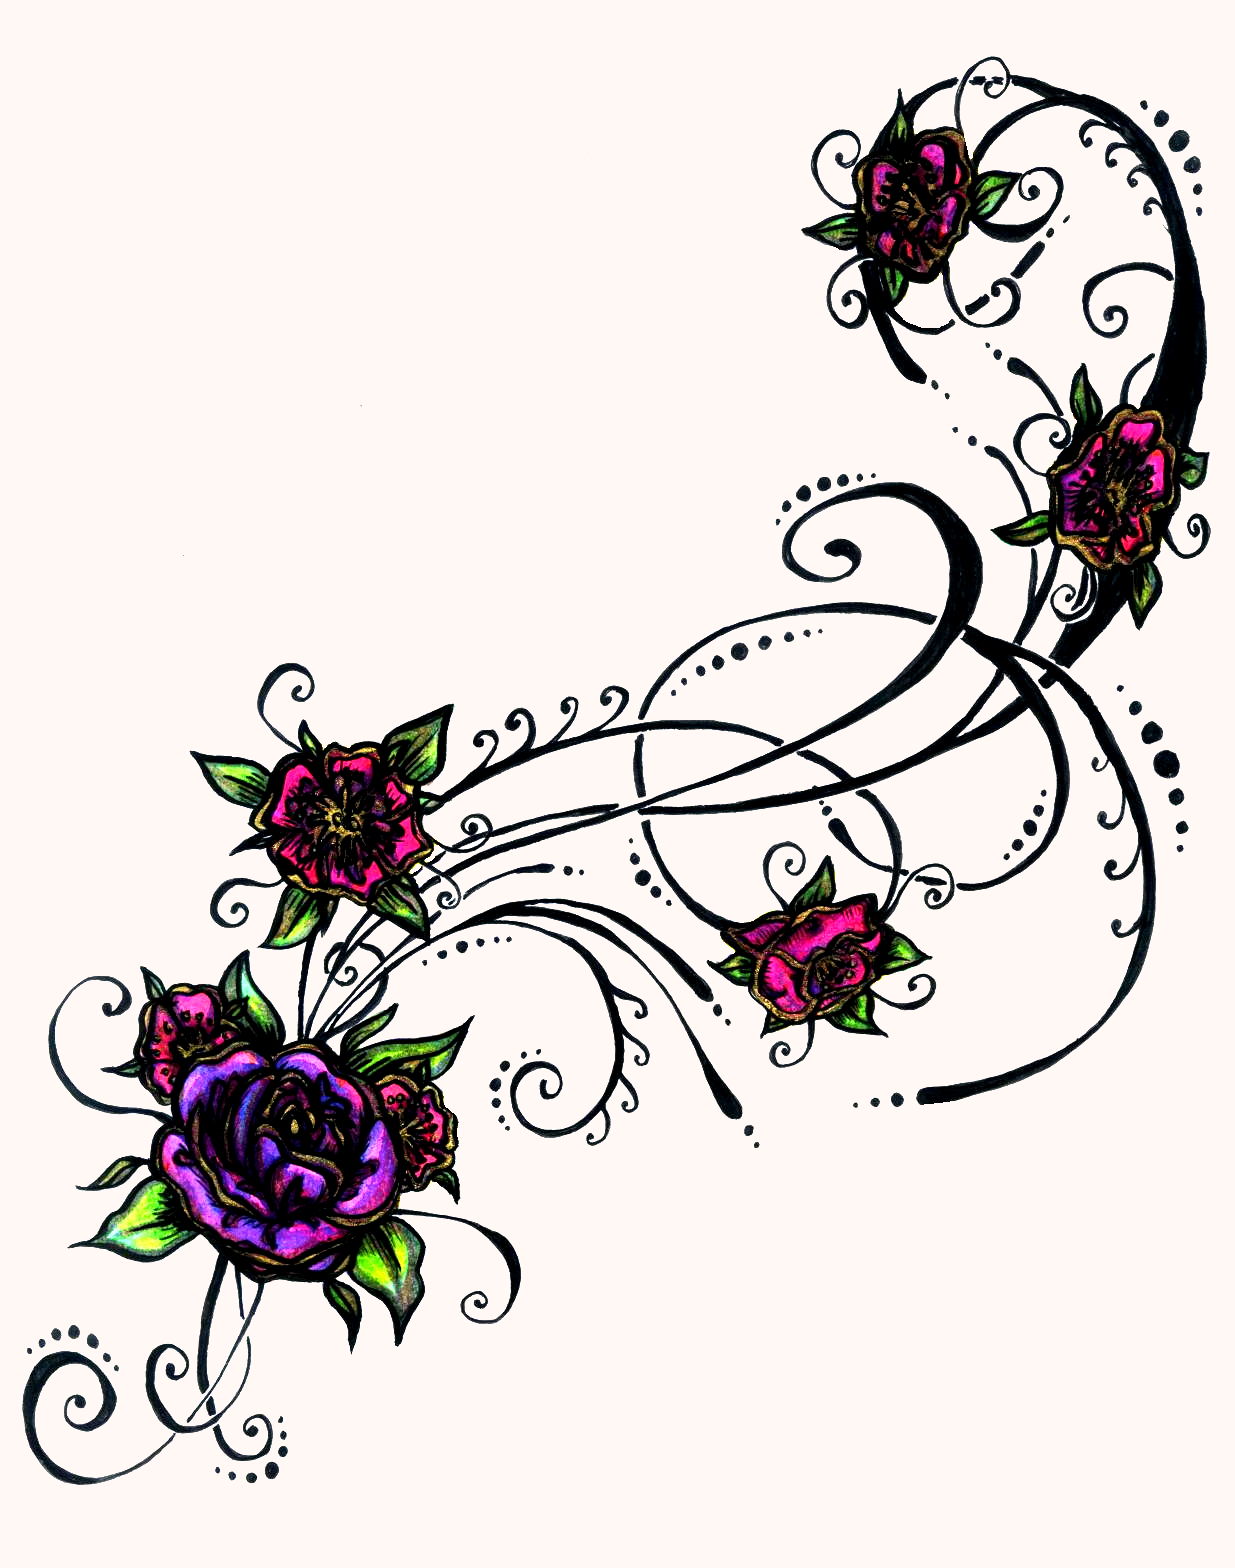 Flower Tattoos: What do they mean? | Folsom and Sacramento Florist ...